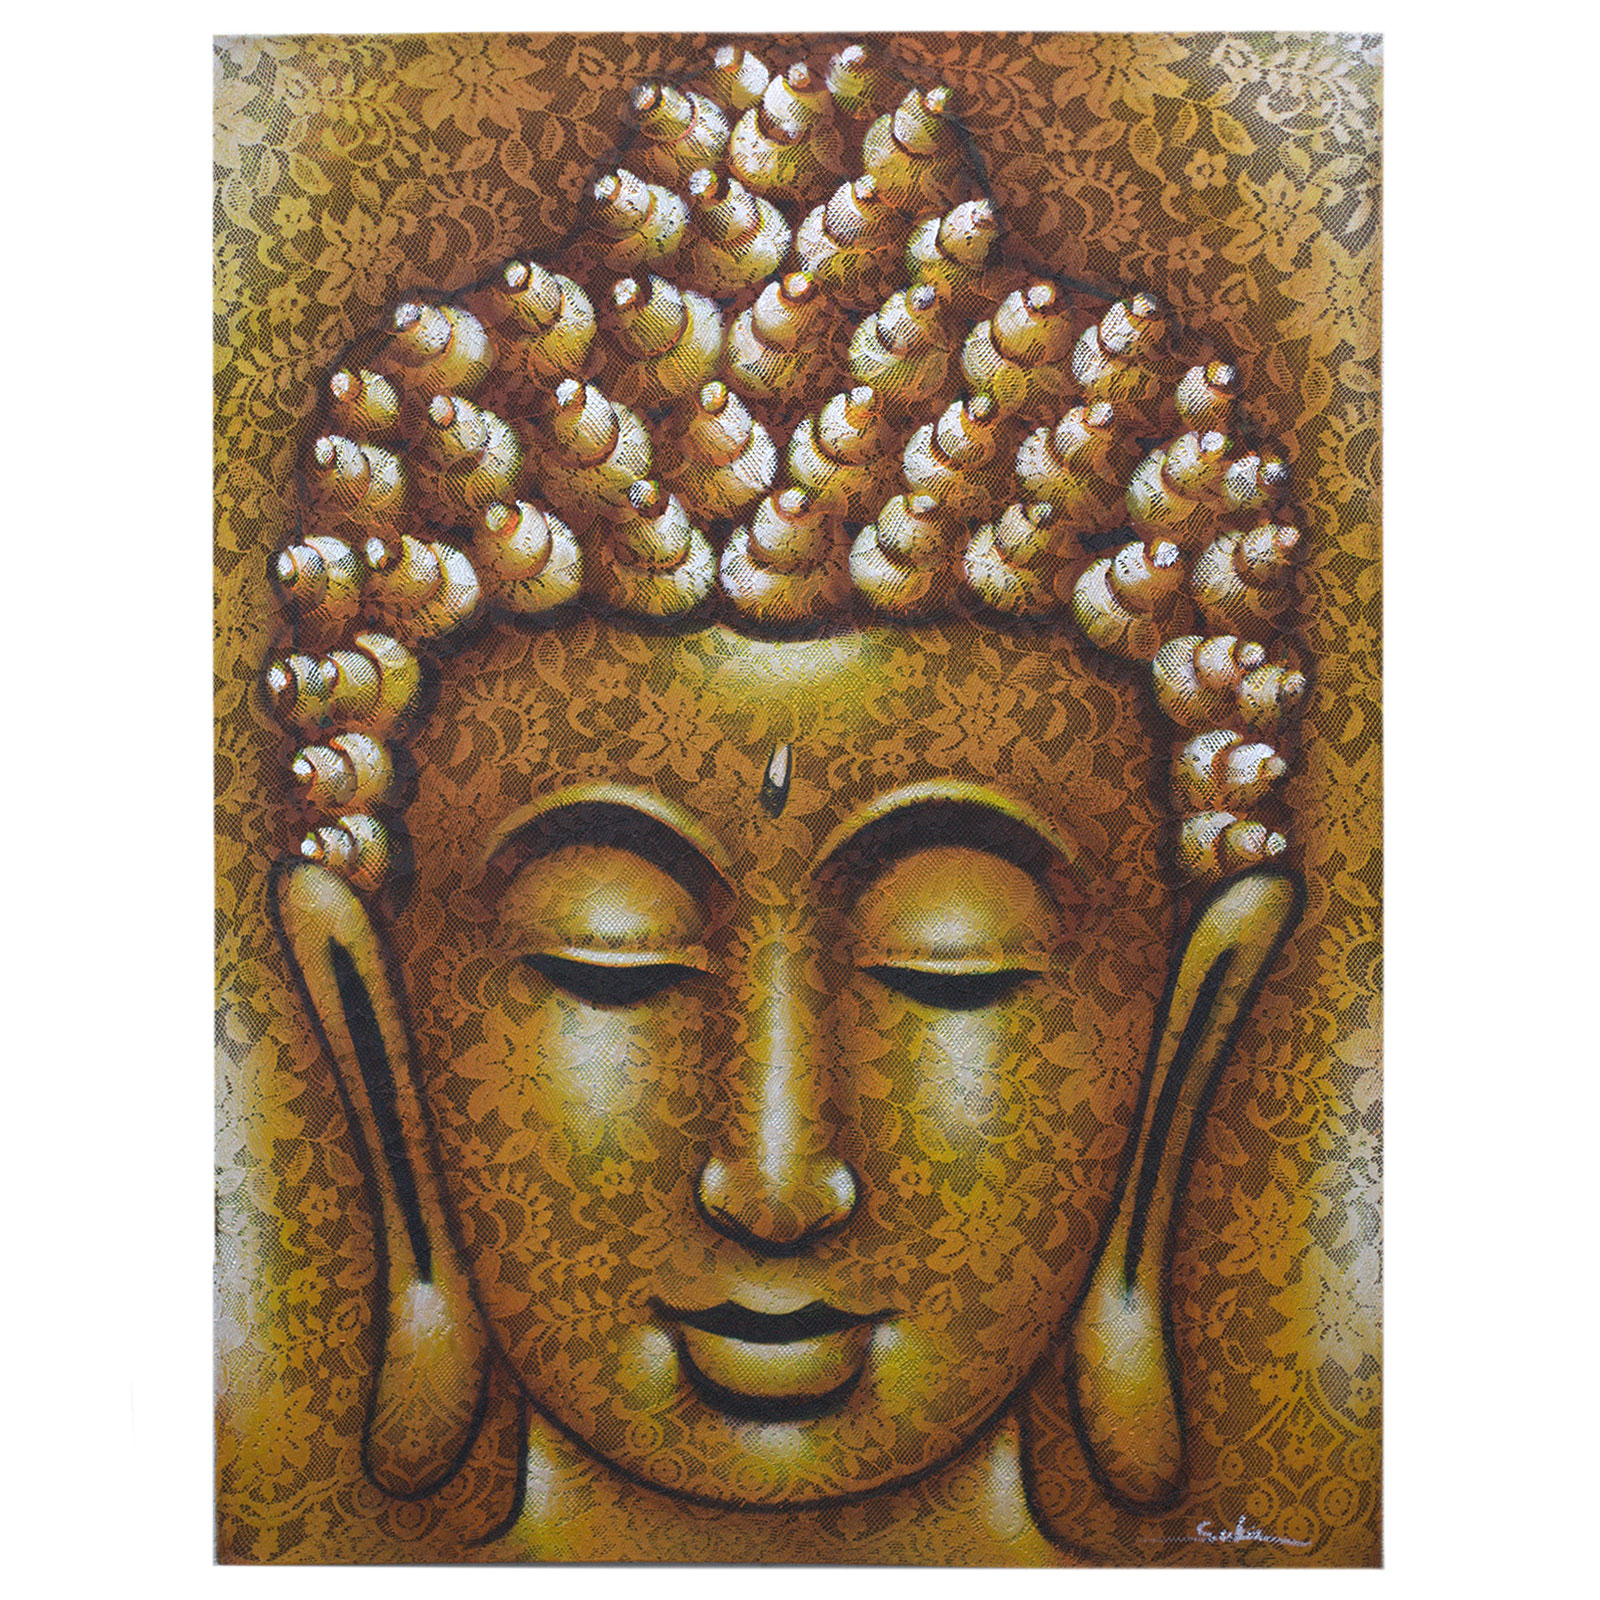 Obraz Buddhu - Detail zlatého brokátu